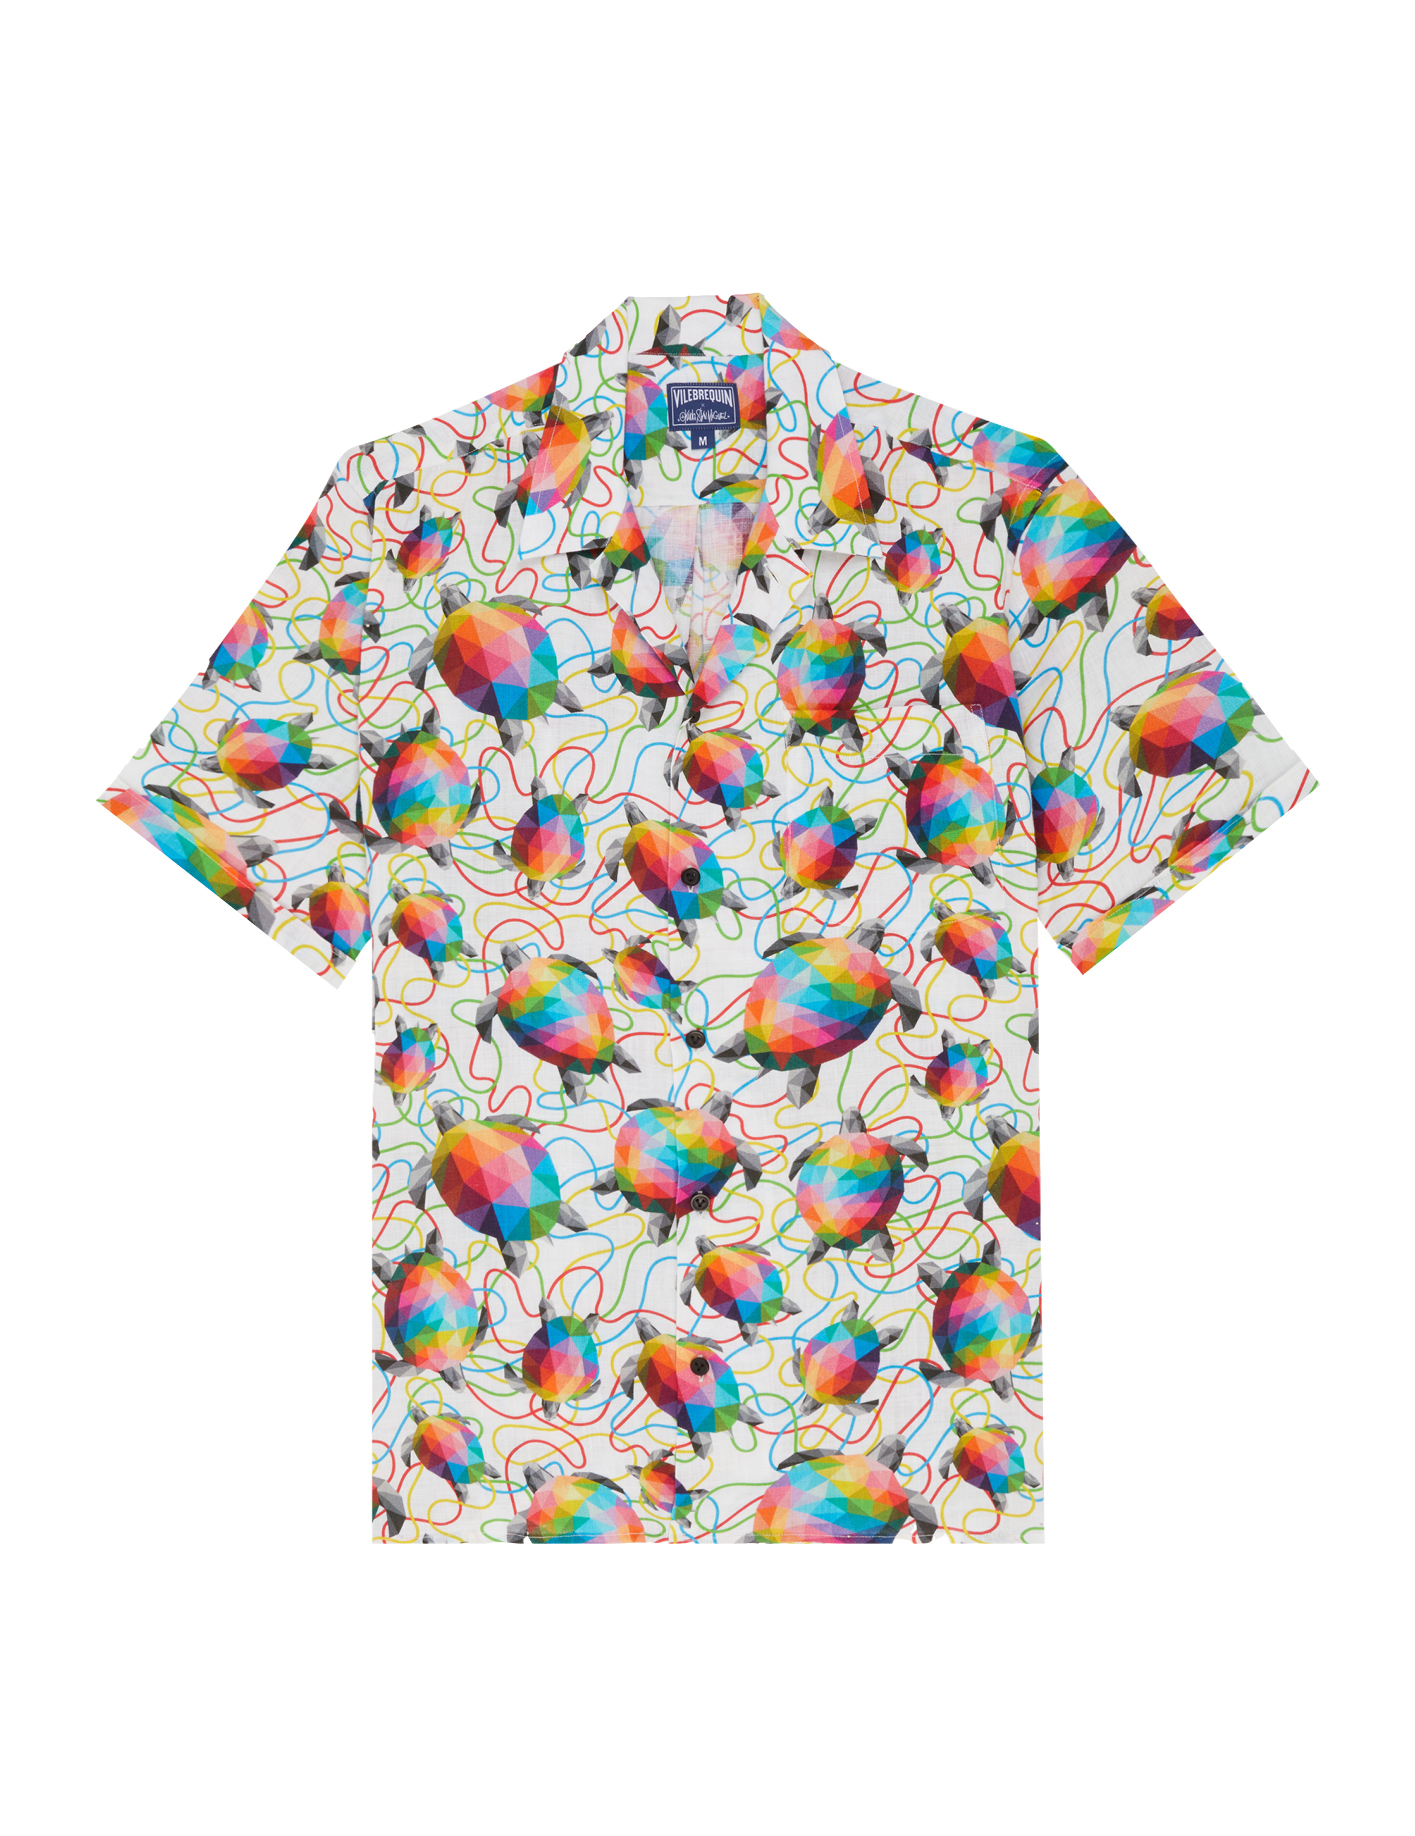 Men’s linen bowling shirt in Tortugas, £205